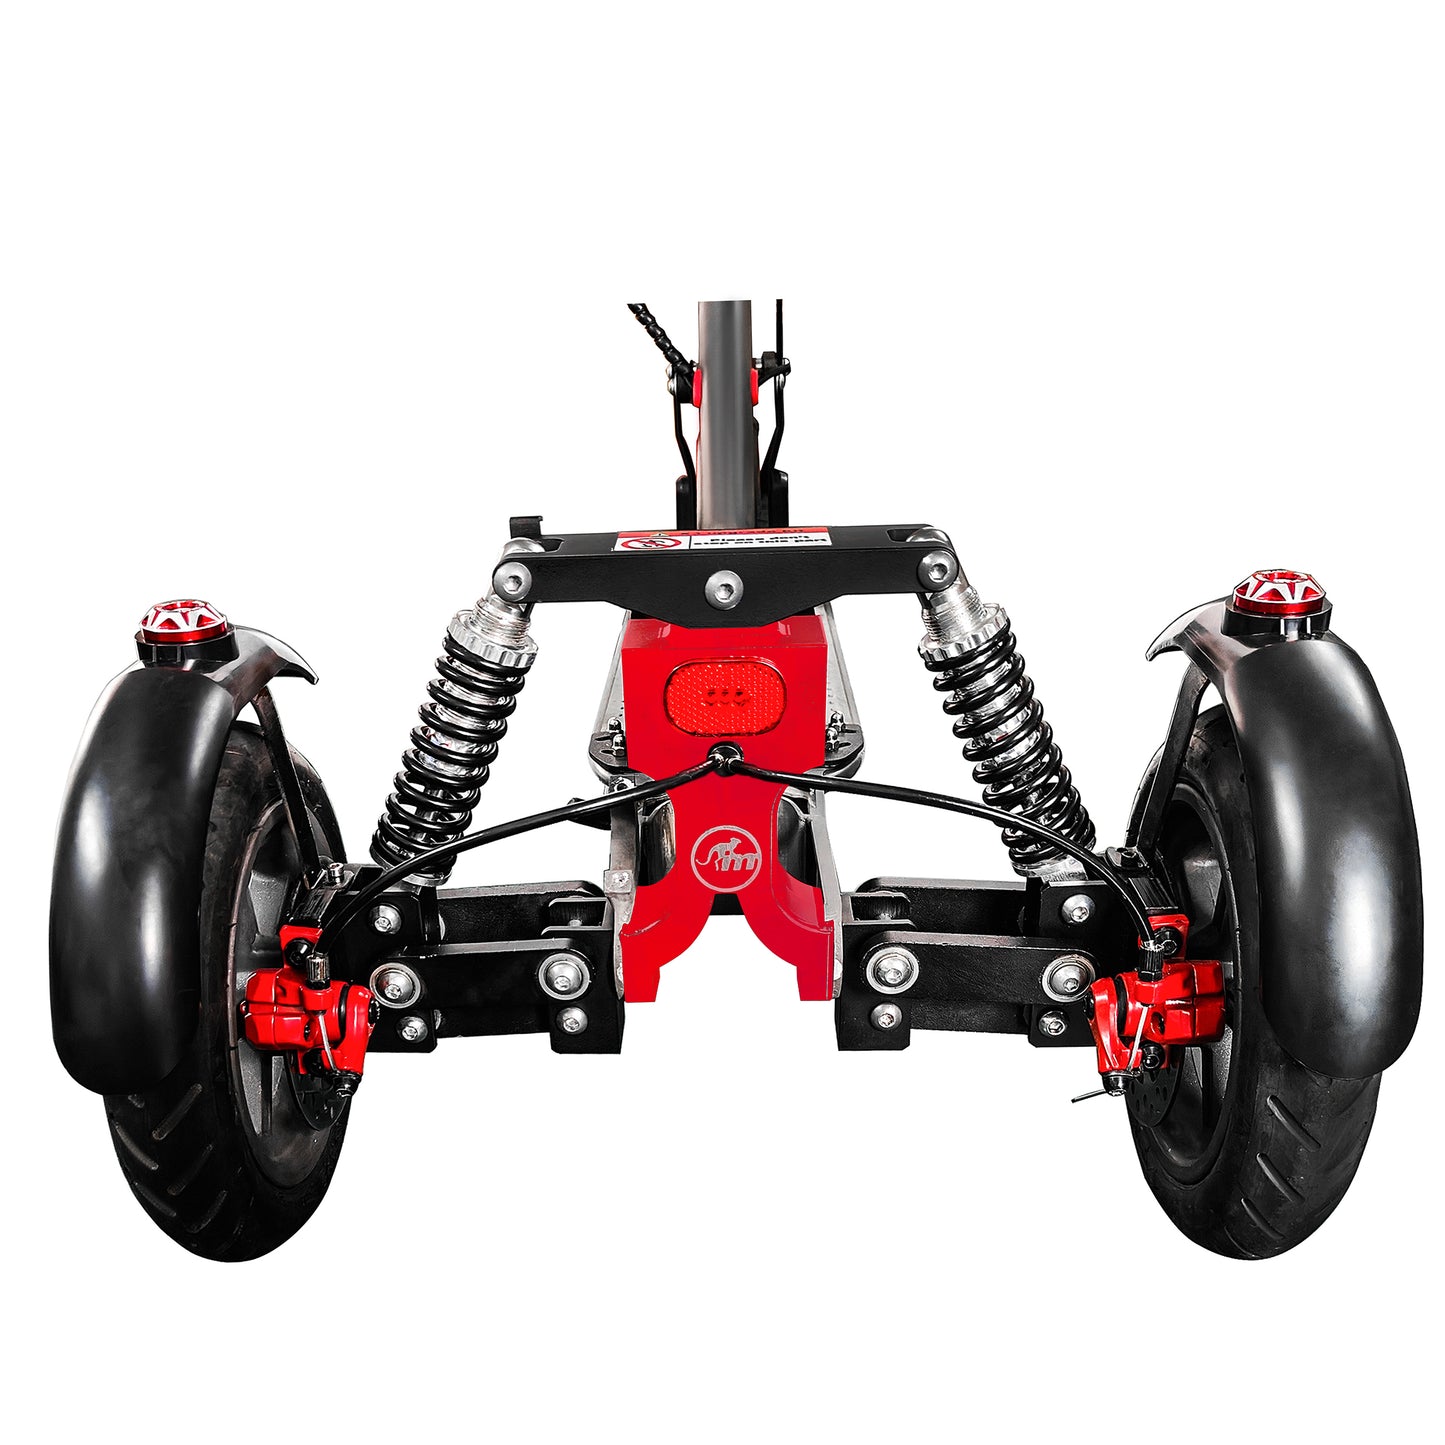 Monorim X3 upgrade kit to be Three wheels  special for xiaomi m365/pro1/pro2/mi3 scooter